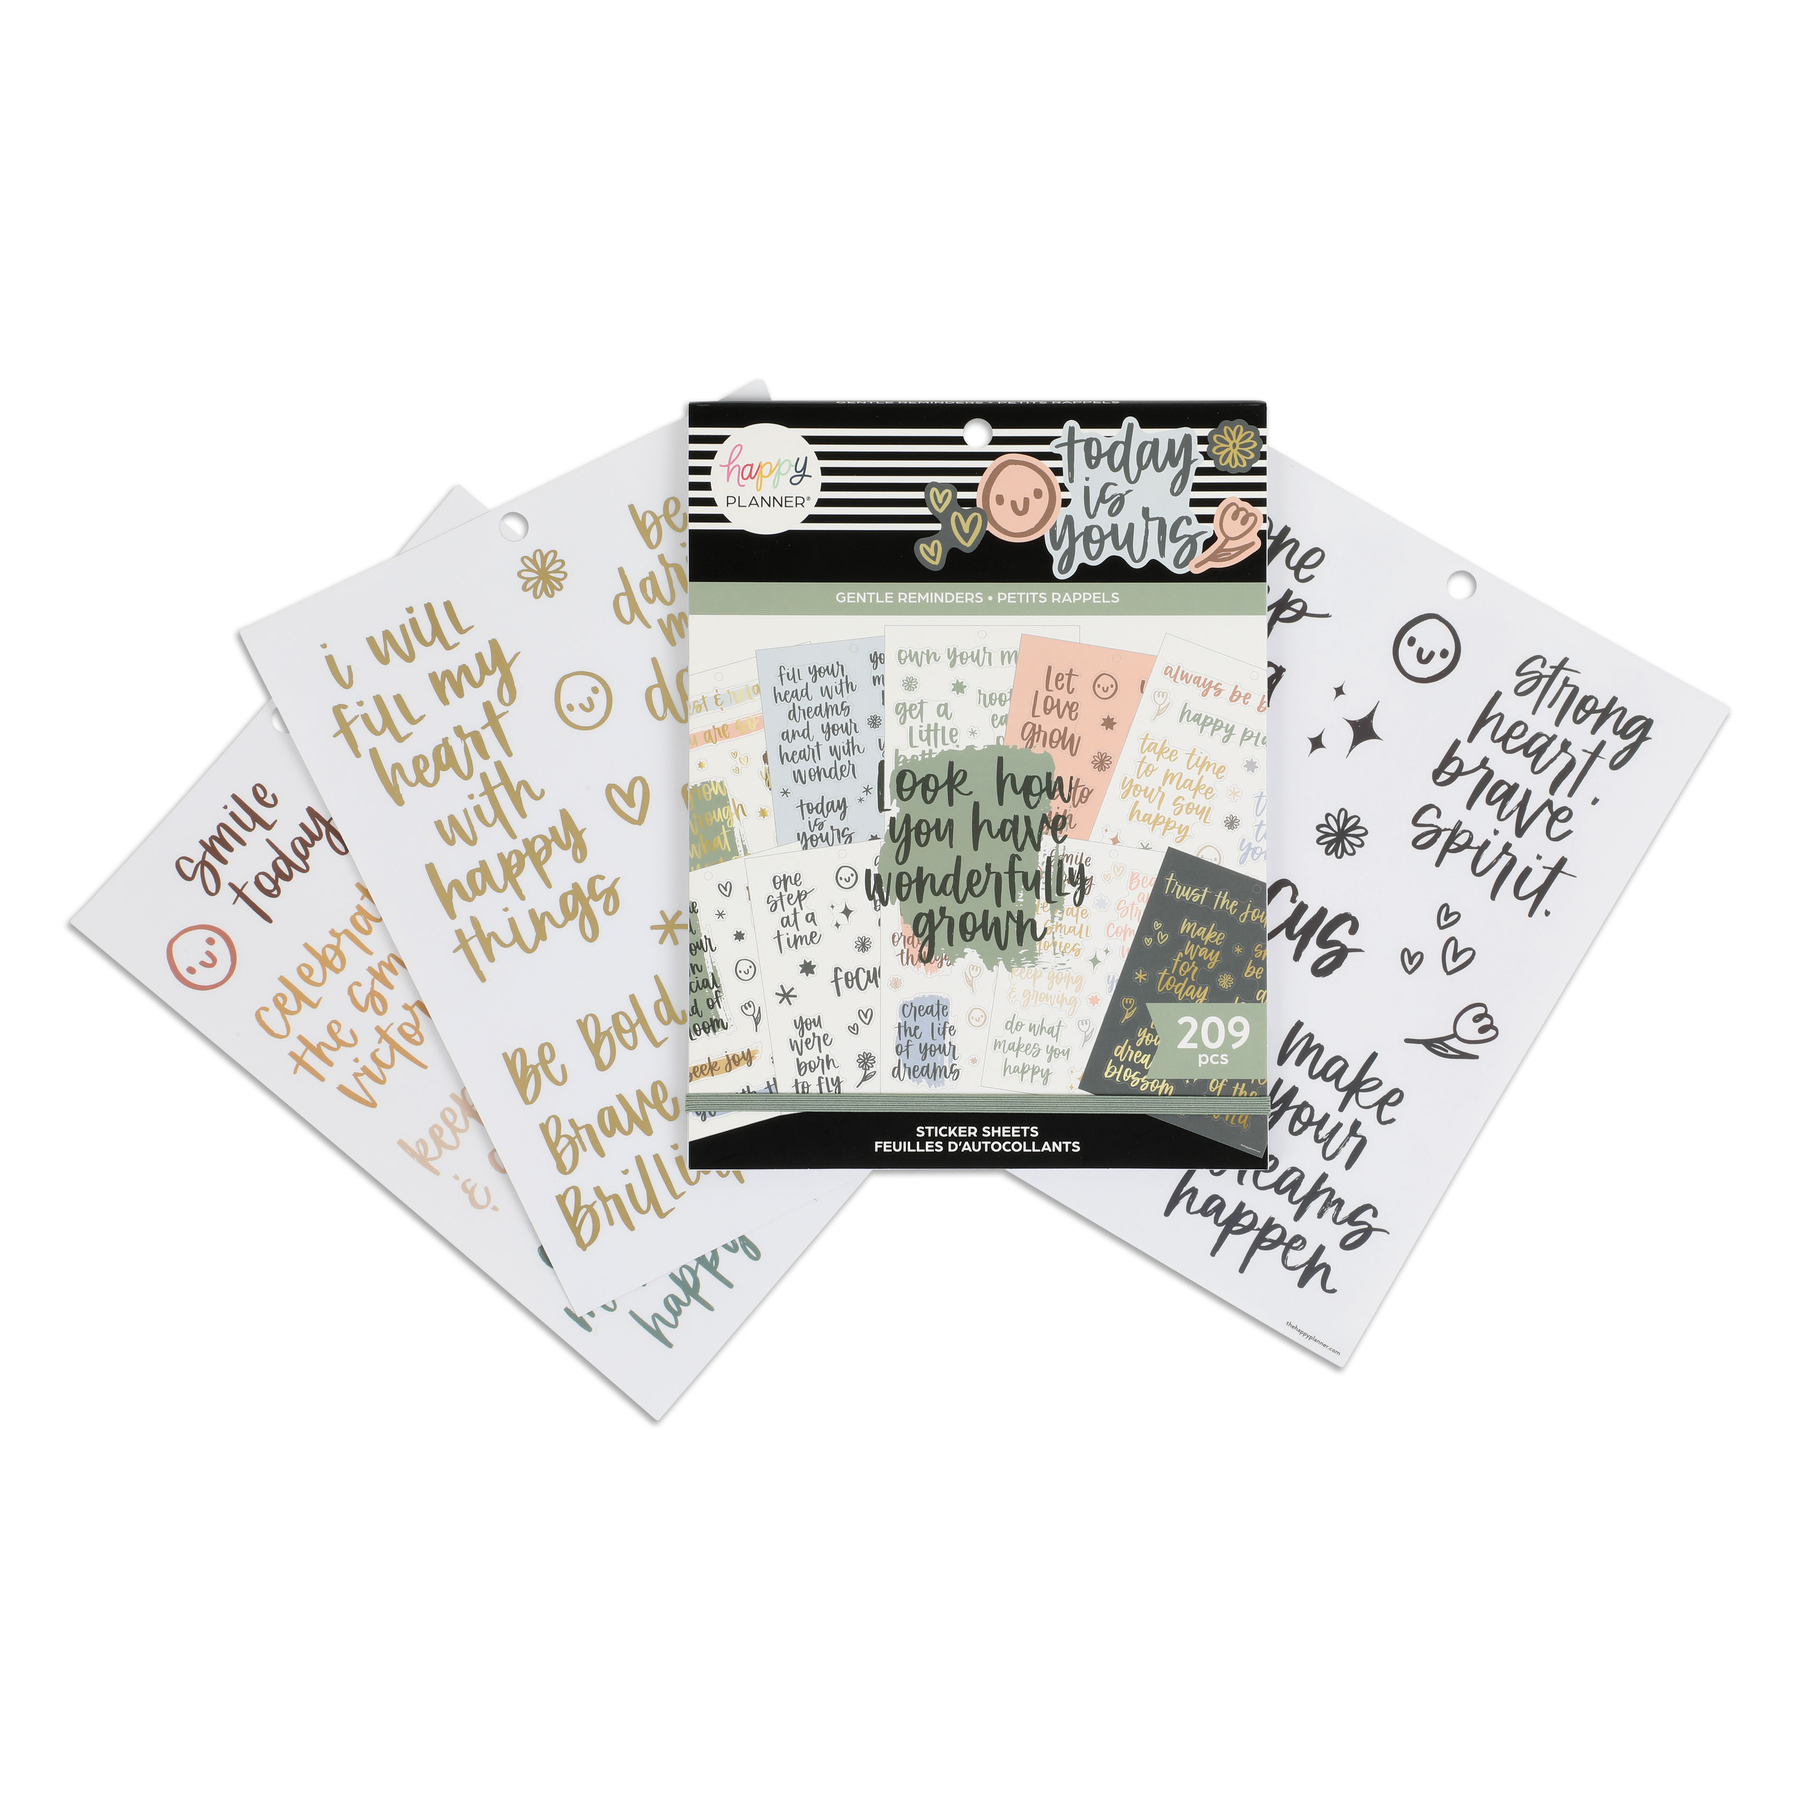 6 Sheets Cute Little Icon Sticker Pack / Kawaii Stickers / Junk Journal /  Stickers / Planner Sticker Set -  Sweden